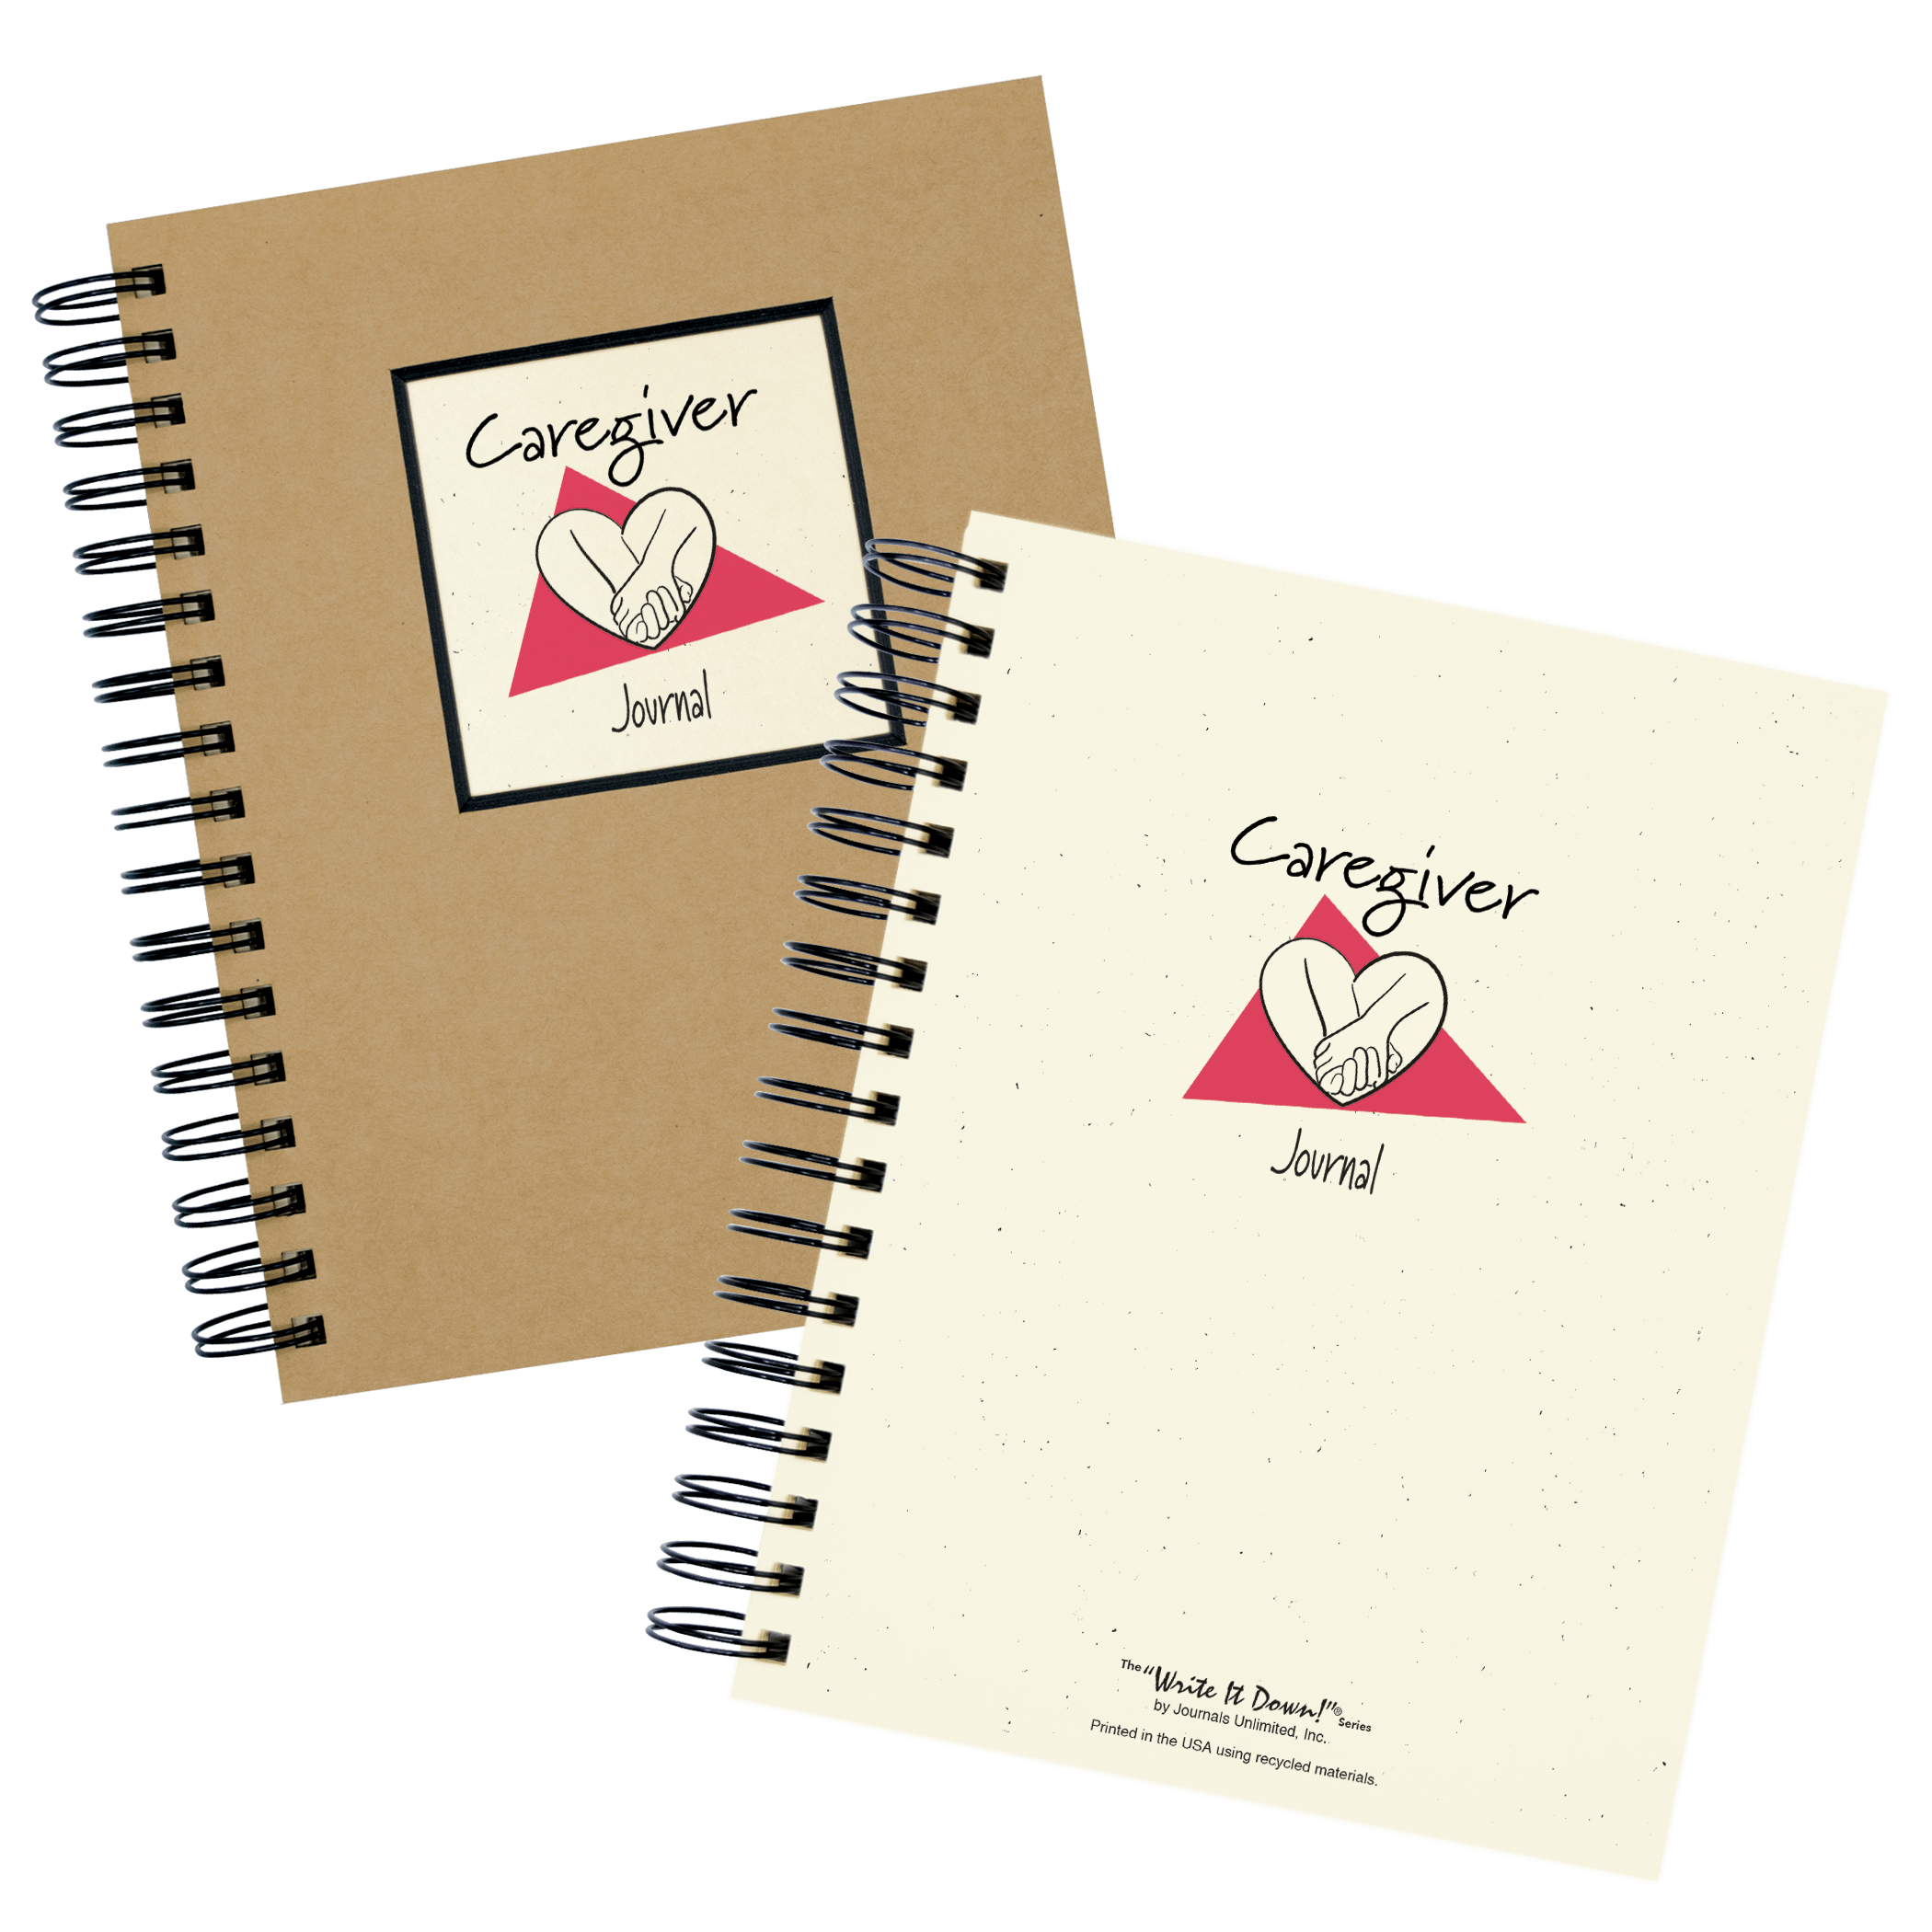 caregiver-journal-journals-unlimited-inc